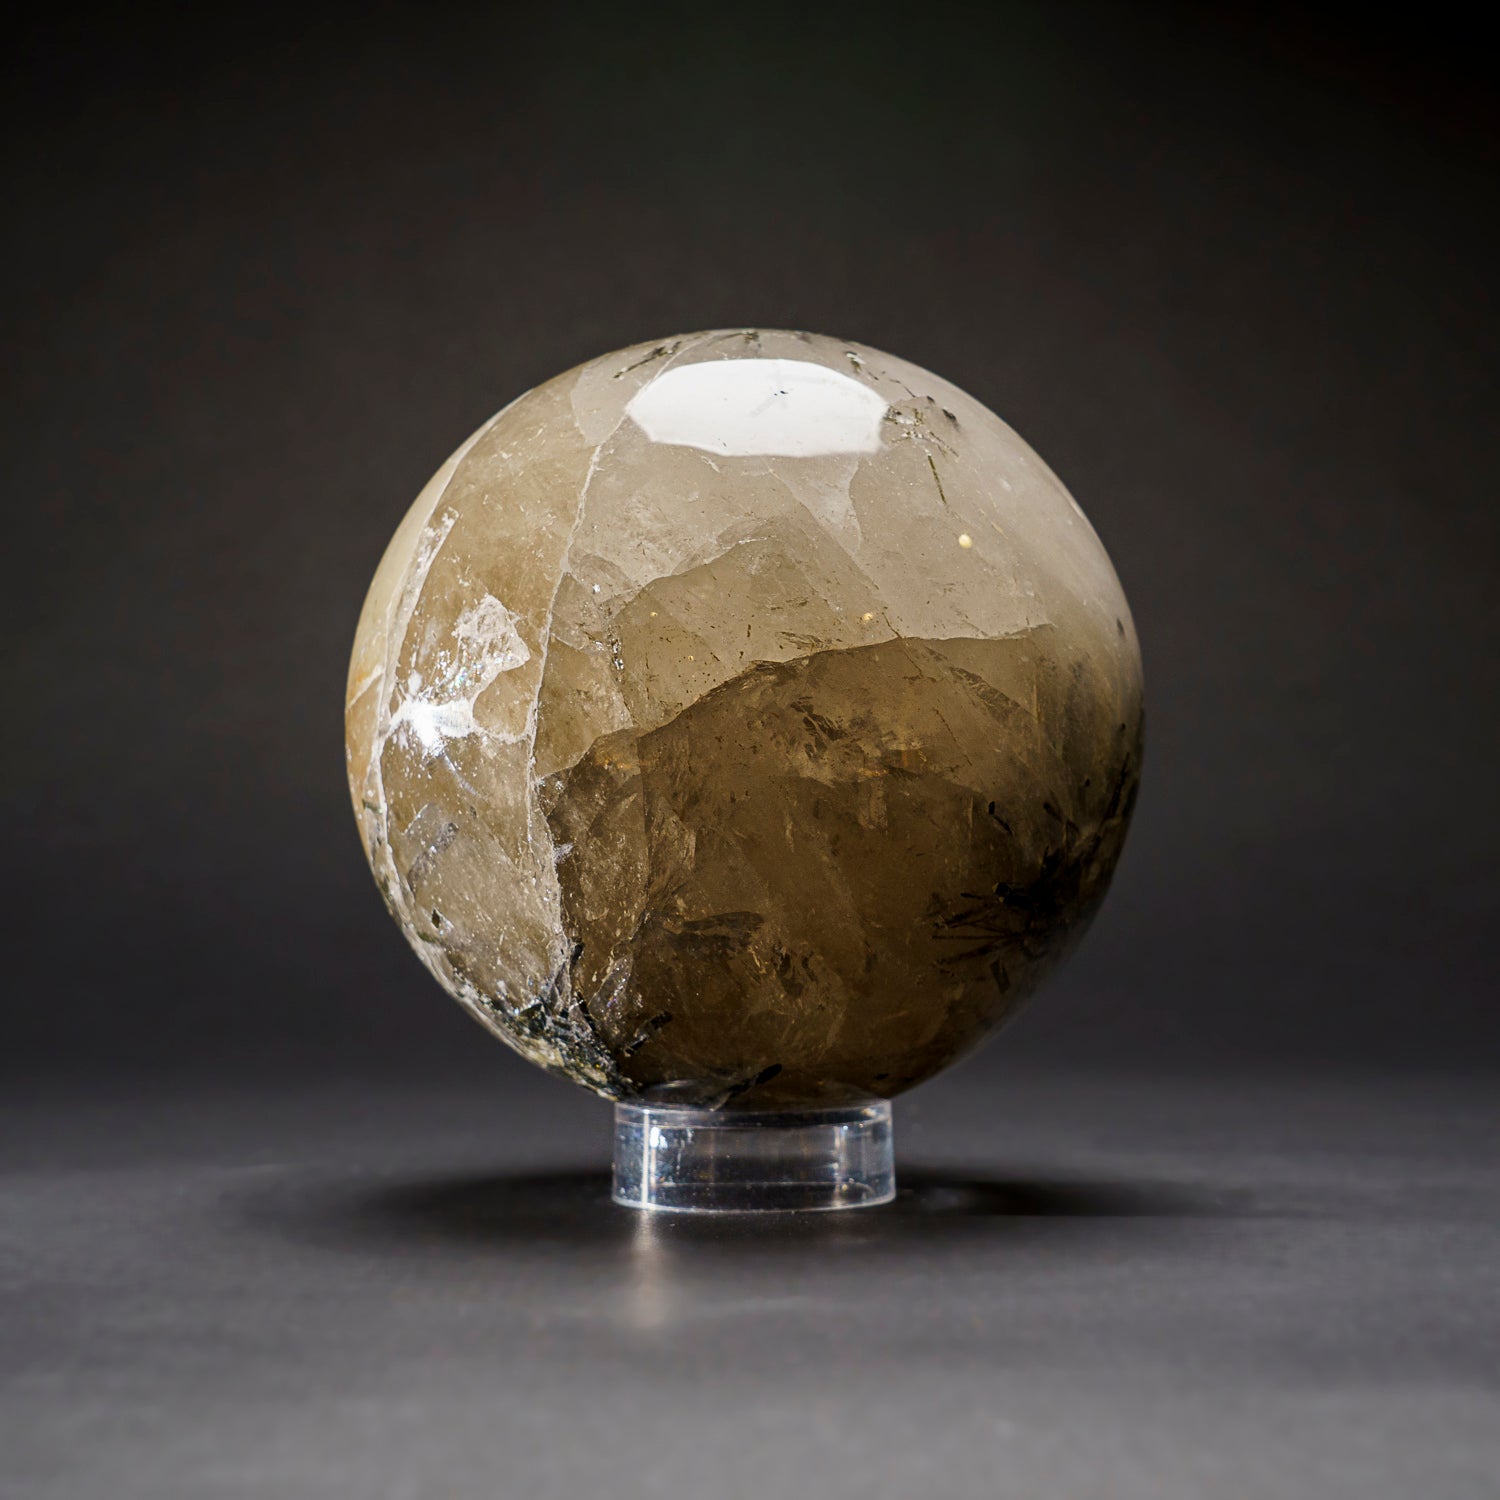 Genuine Polished Quartz with Tourmaline Sphere (5", 6 lbs)